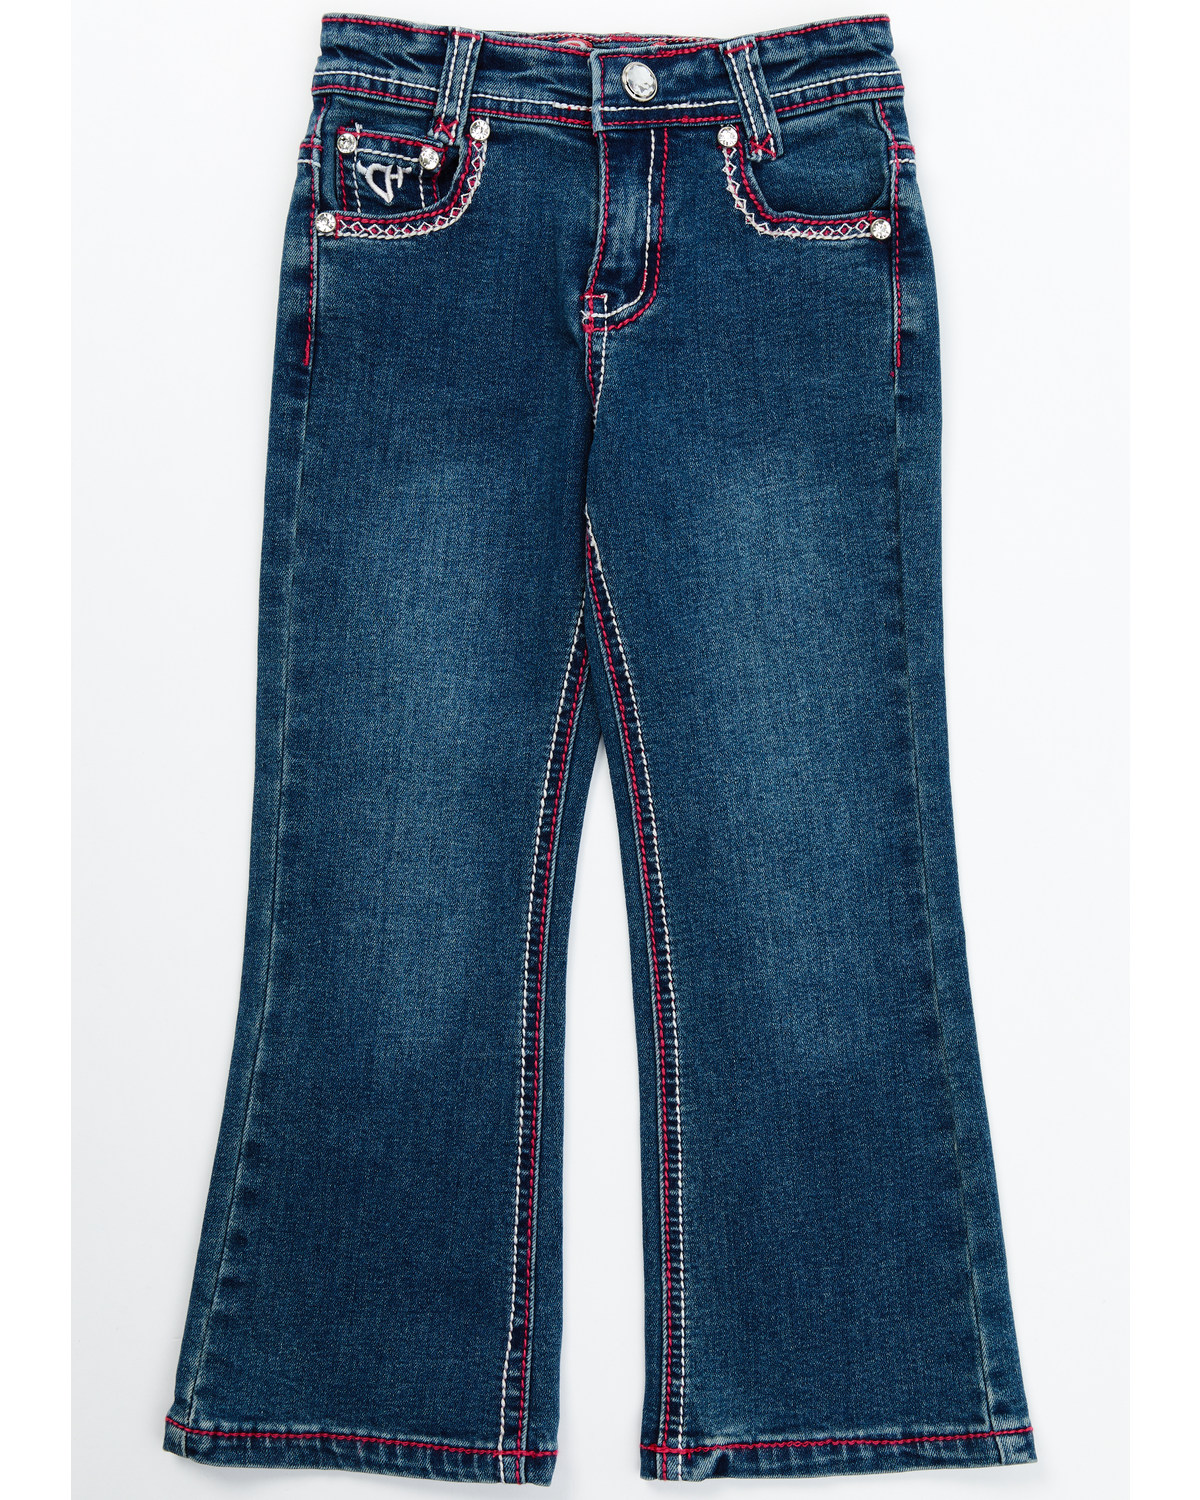 Cowgirl Hardware Toddler Girls' Medium Wash Southwestern Bootcut Jeans